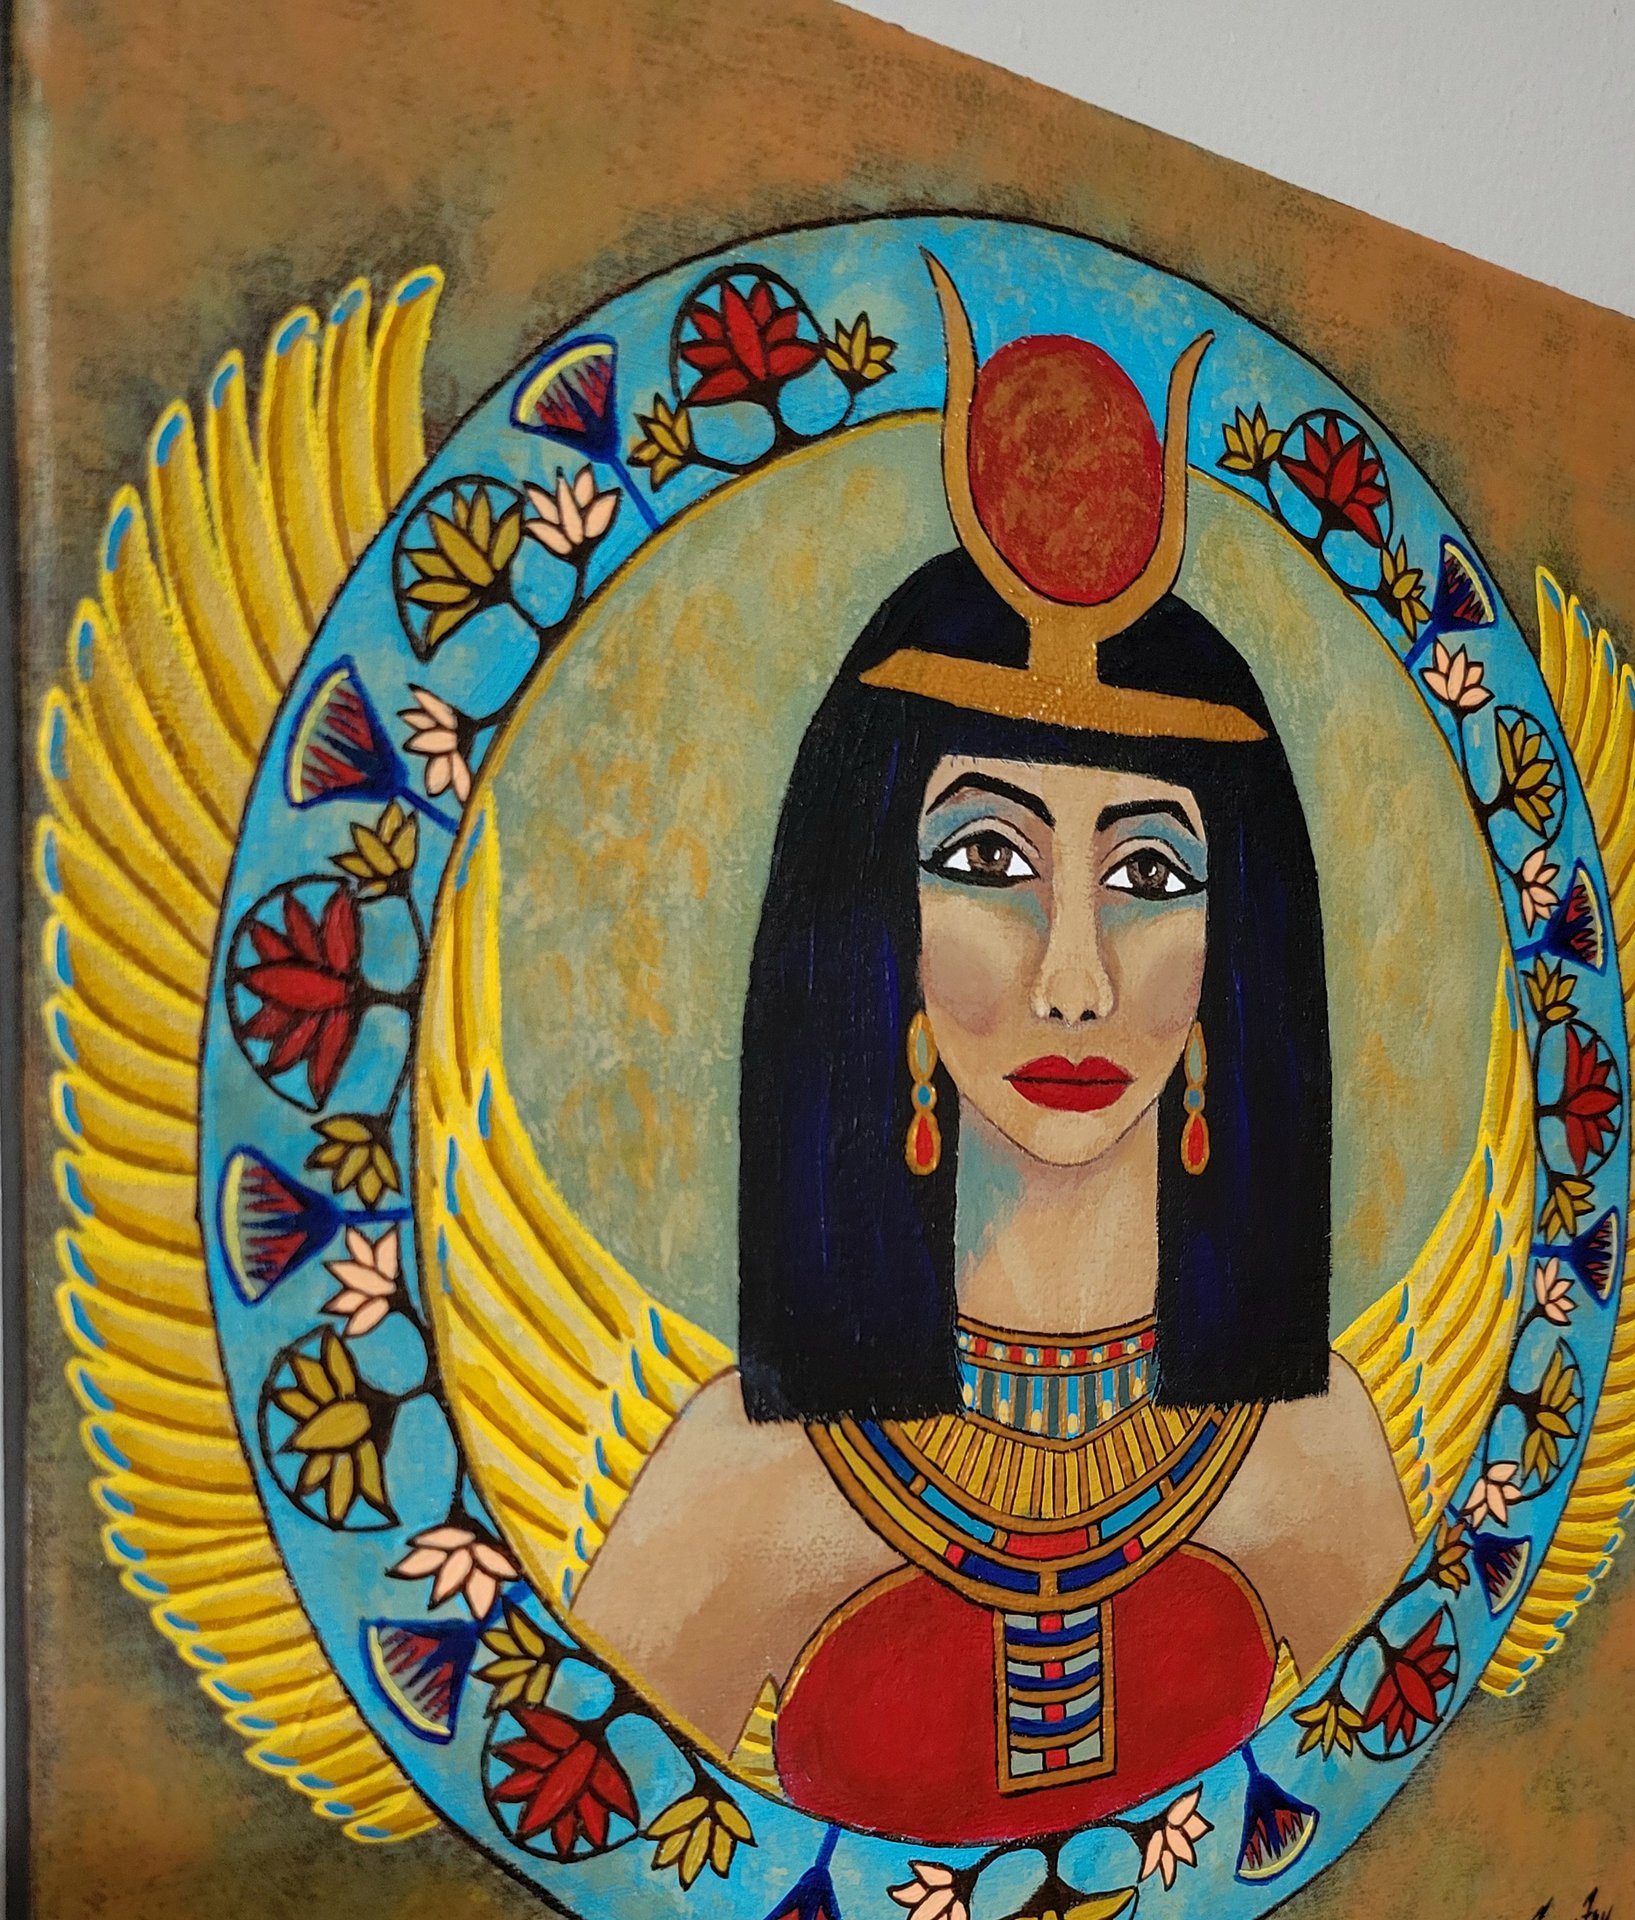 Goddess Isis Wall Art - Original Painting 12x12